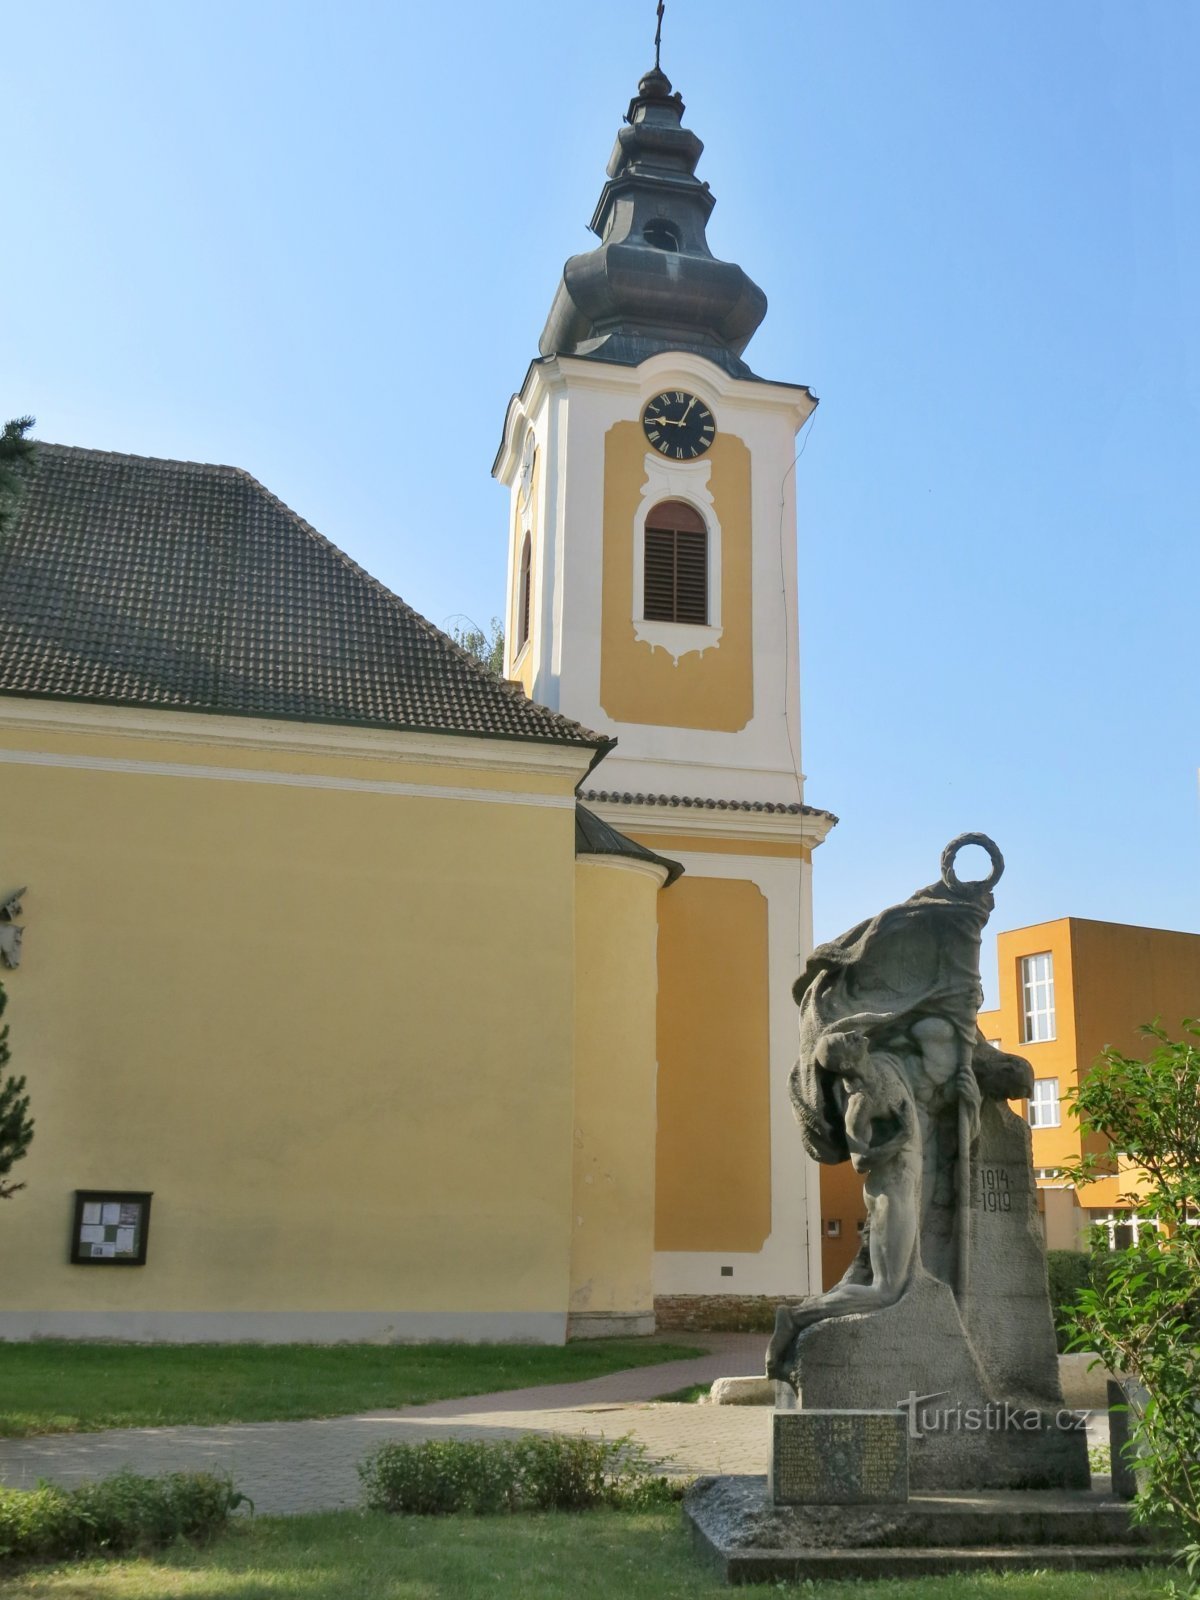 Planá nad Lužnicí - biserica Sf. Wenceslas